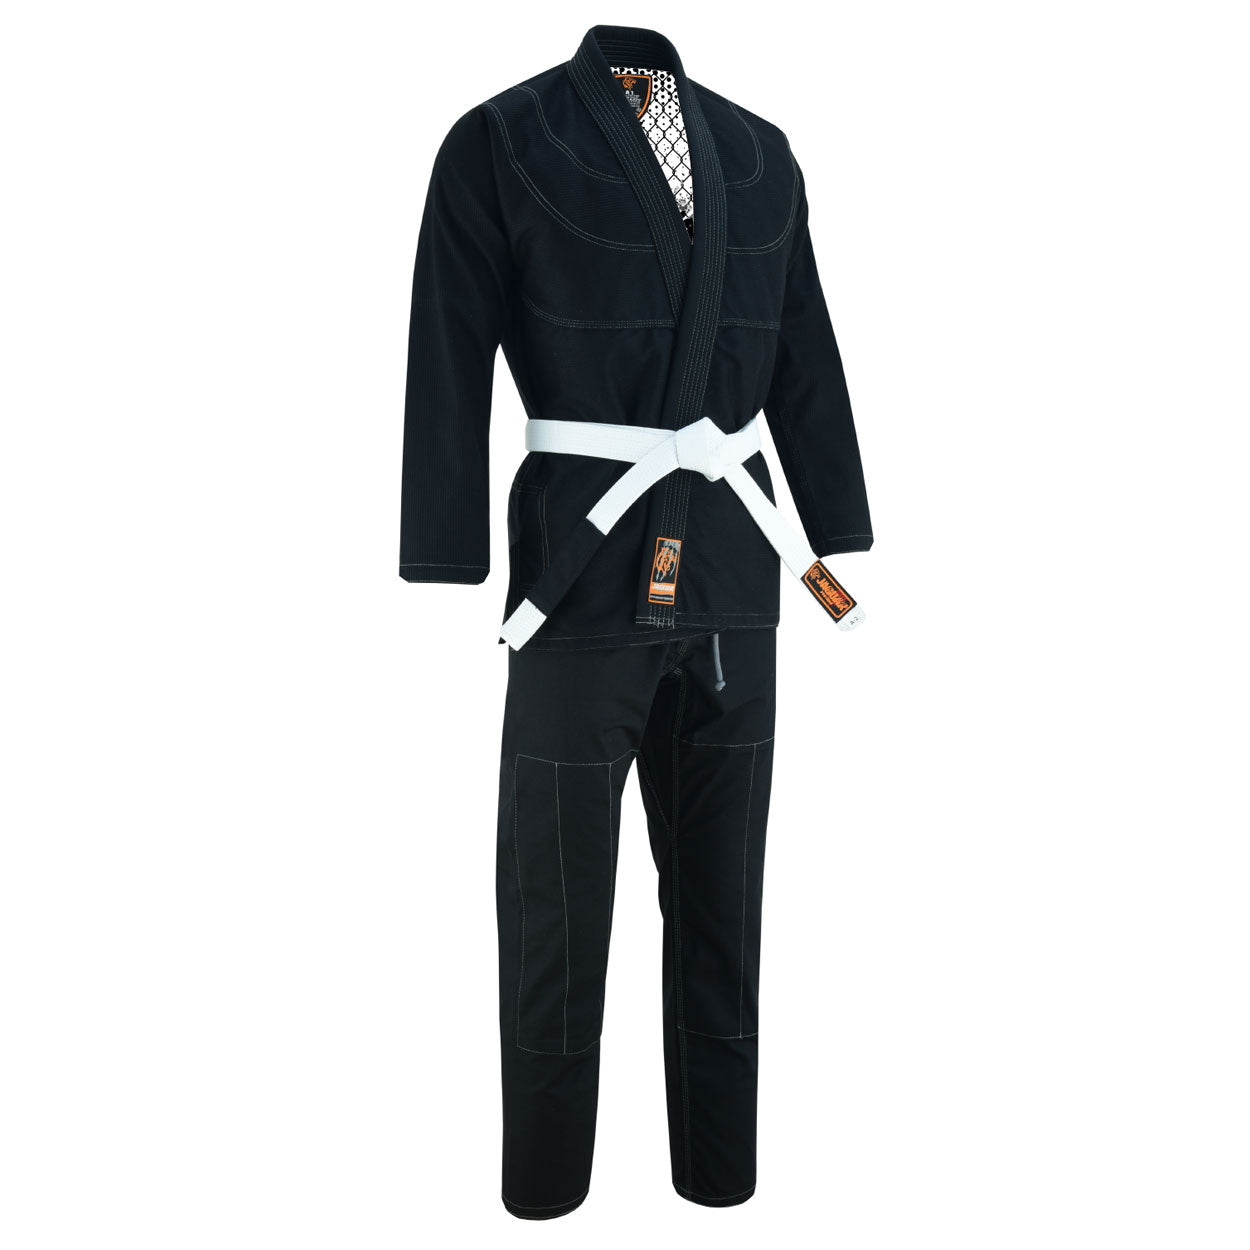 Jaguar Pro Gear – Way of the Warrior Inner Sublimated - Pro Brazilian Jiu Jitsu BJJ Kimono Gi Uniform Unisex